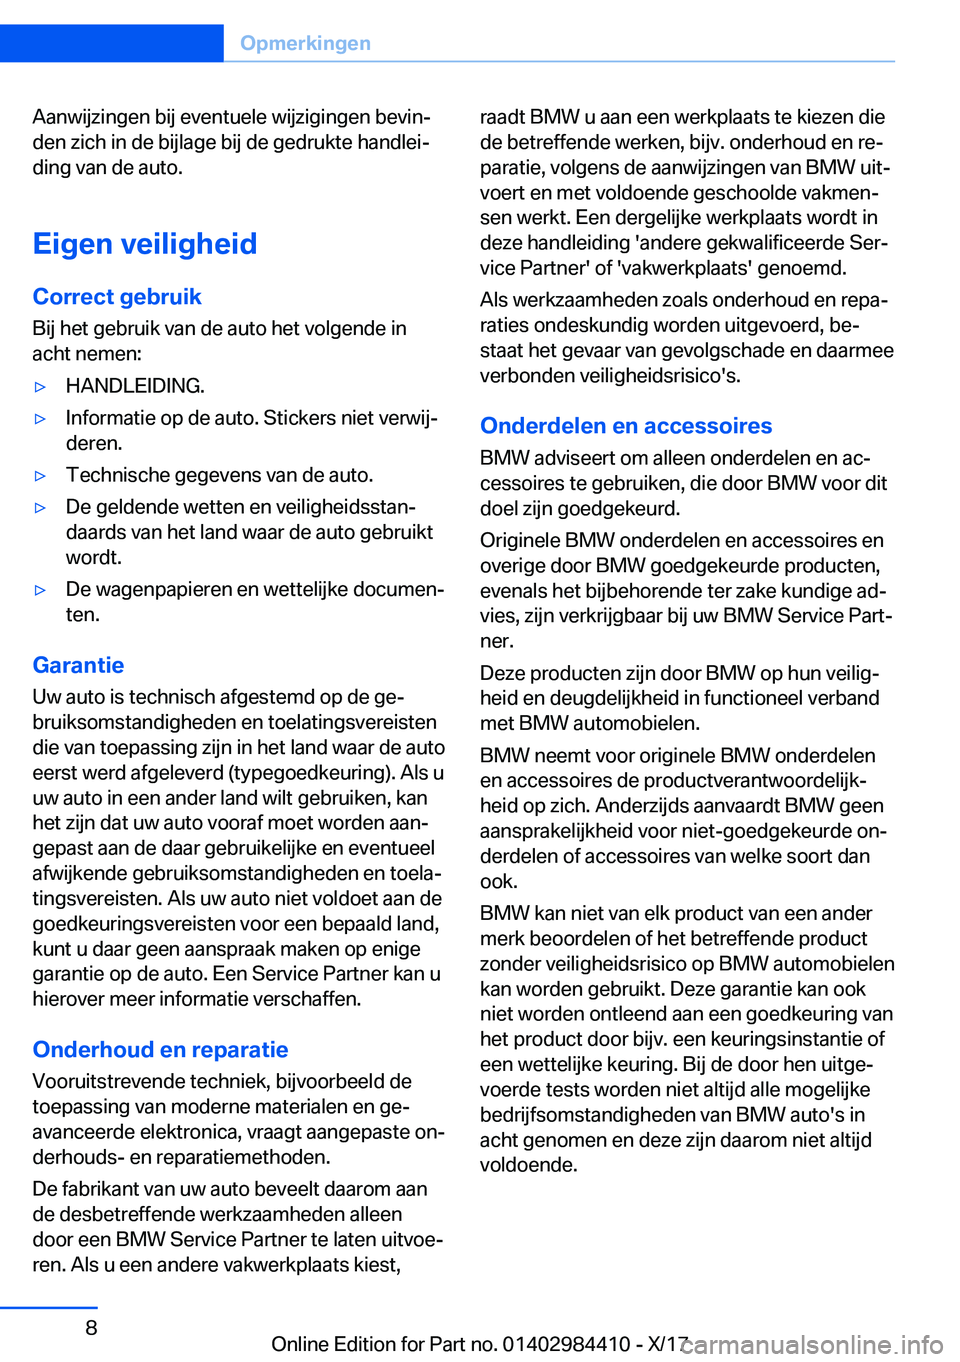 BMW 4 SERIES COUPE 2018  Instructieboekjes (in Dutch) �A�a�n�w�i�j�z�i�n�g�e�n� �b�i�j� �e�v�e�n�t�u�e�l�e� �w�i�j�z�i�g�i�n�g�e�n� �b�e�v�i�nj
�d�e�n� �z�i�c�h� �i�n� �d�e� �b�i�j�l�a�g�e� �b�i�j� �d�e� �g�e�d�r�u�k�t�e� �h�a�n�d�l�e�ij
�d�i�n�g� �v�a